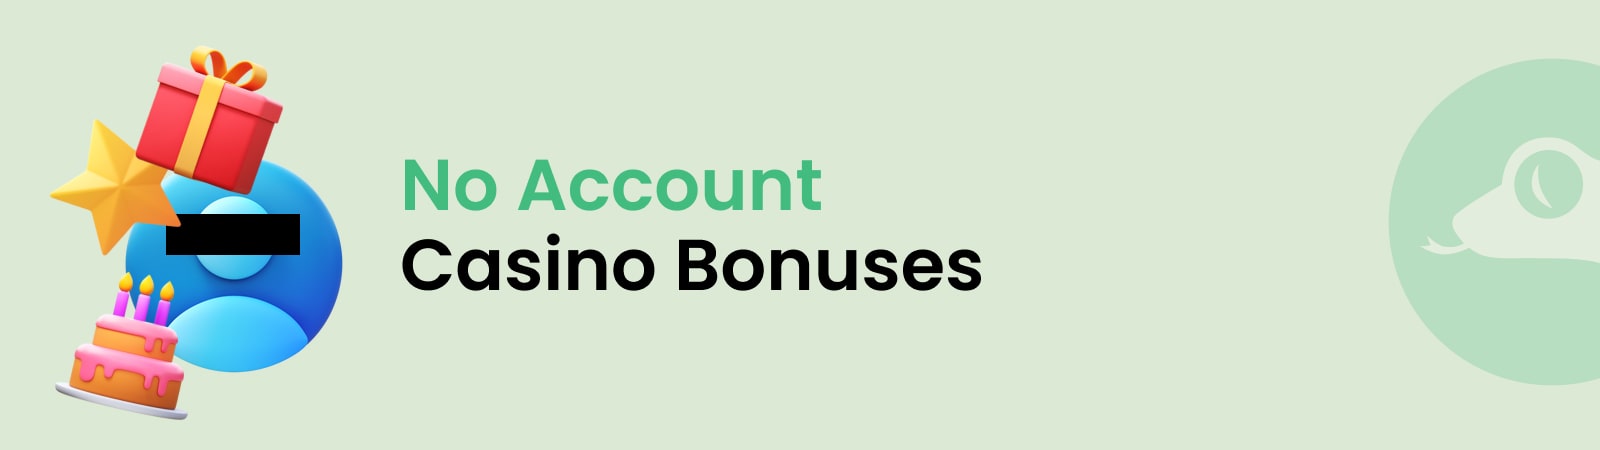 no account casino bonuses